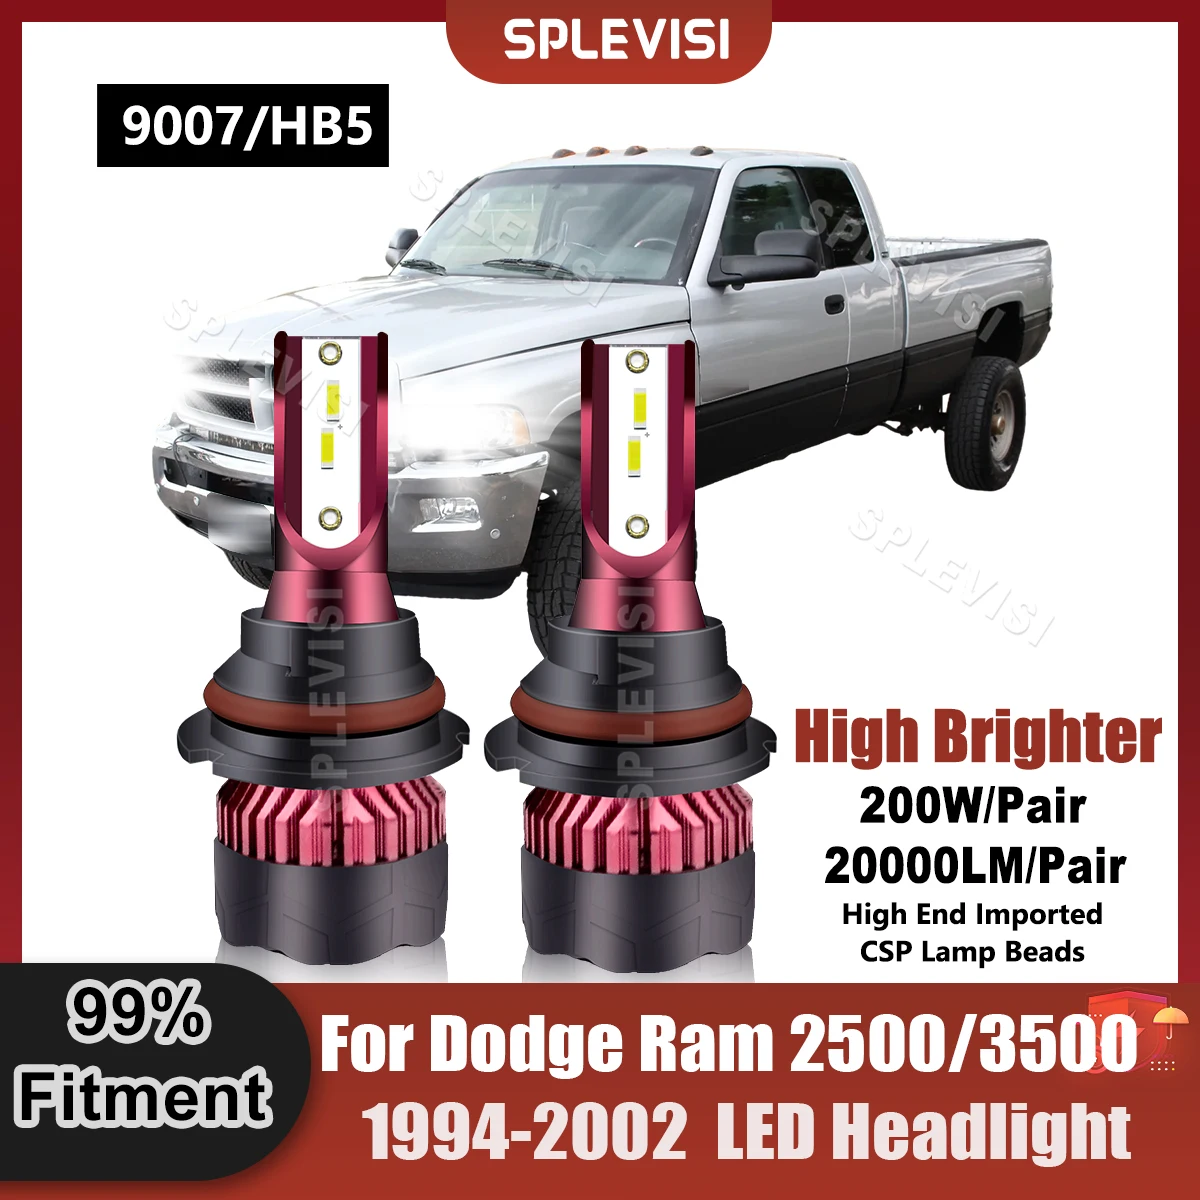 

All-In-One Car LED 9007/HB5 Headlight Bulbs Xenon White For Dodge Ram 2500/3500 1994 1995 1996 1997 1998 1999 2000 2001 2002